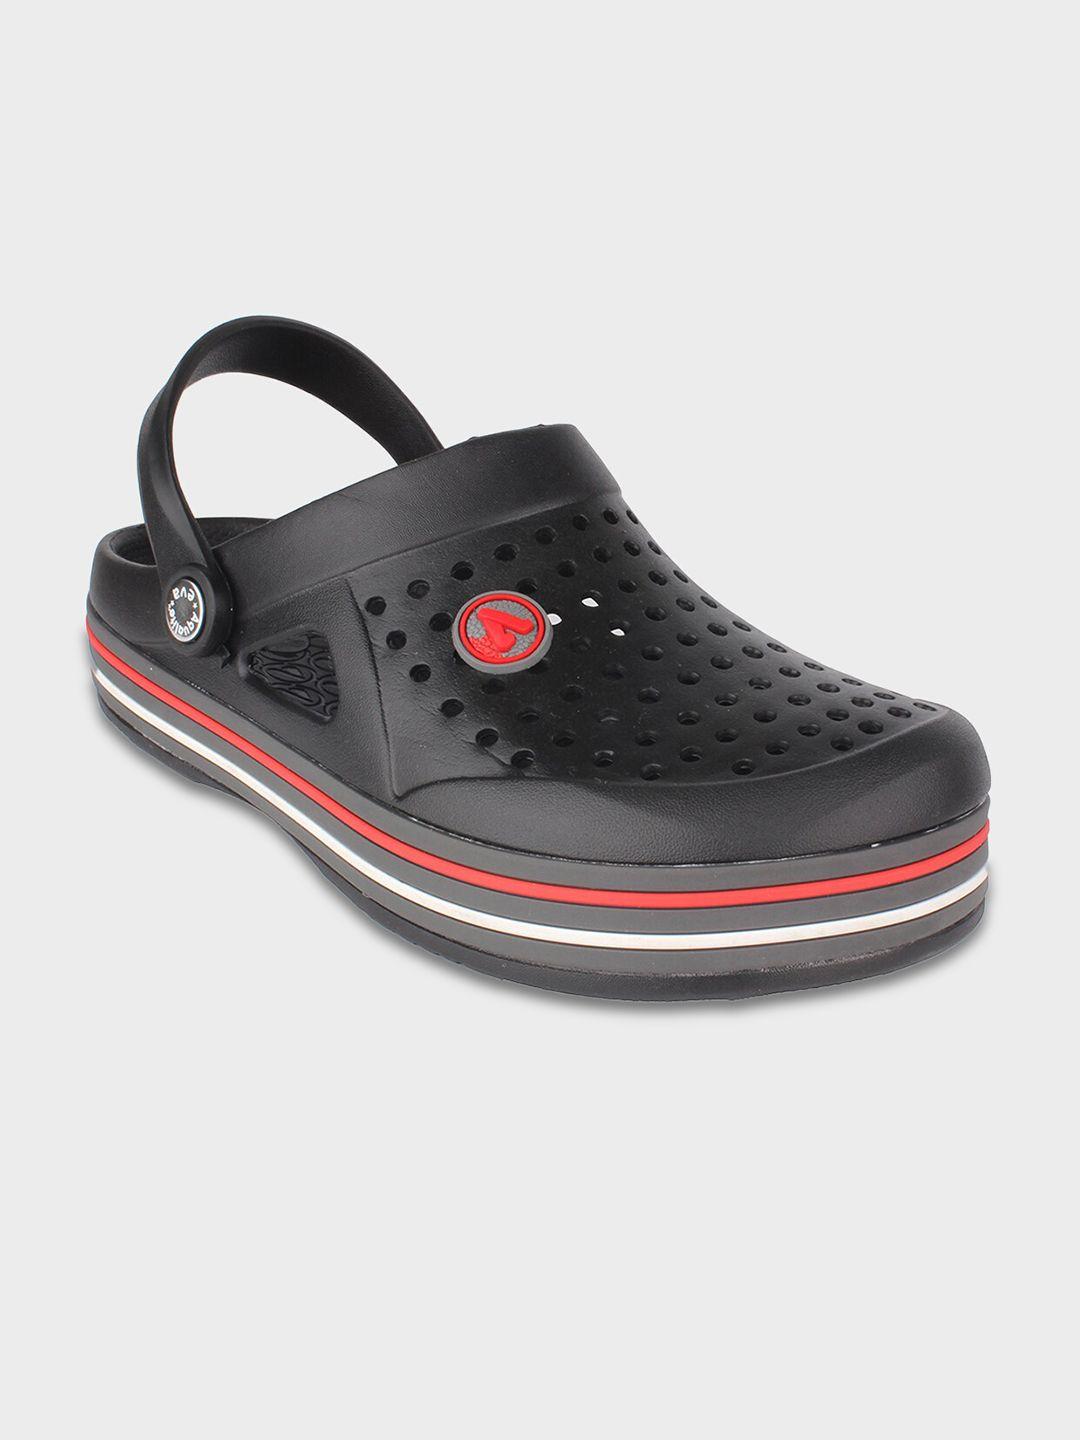 aqualite men black & grey pu clogs sandals